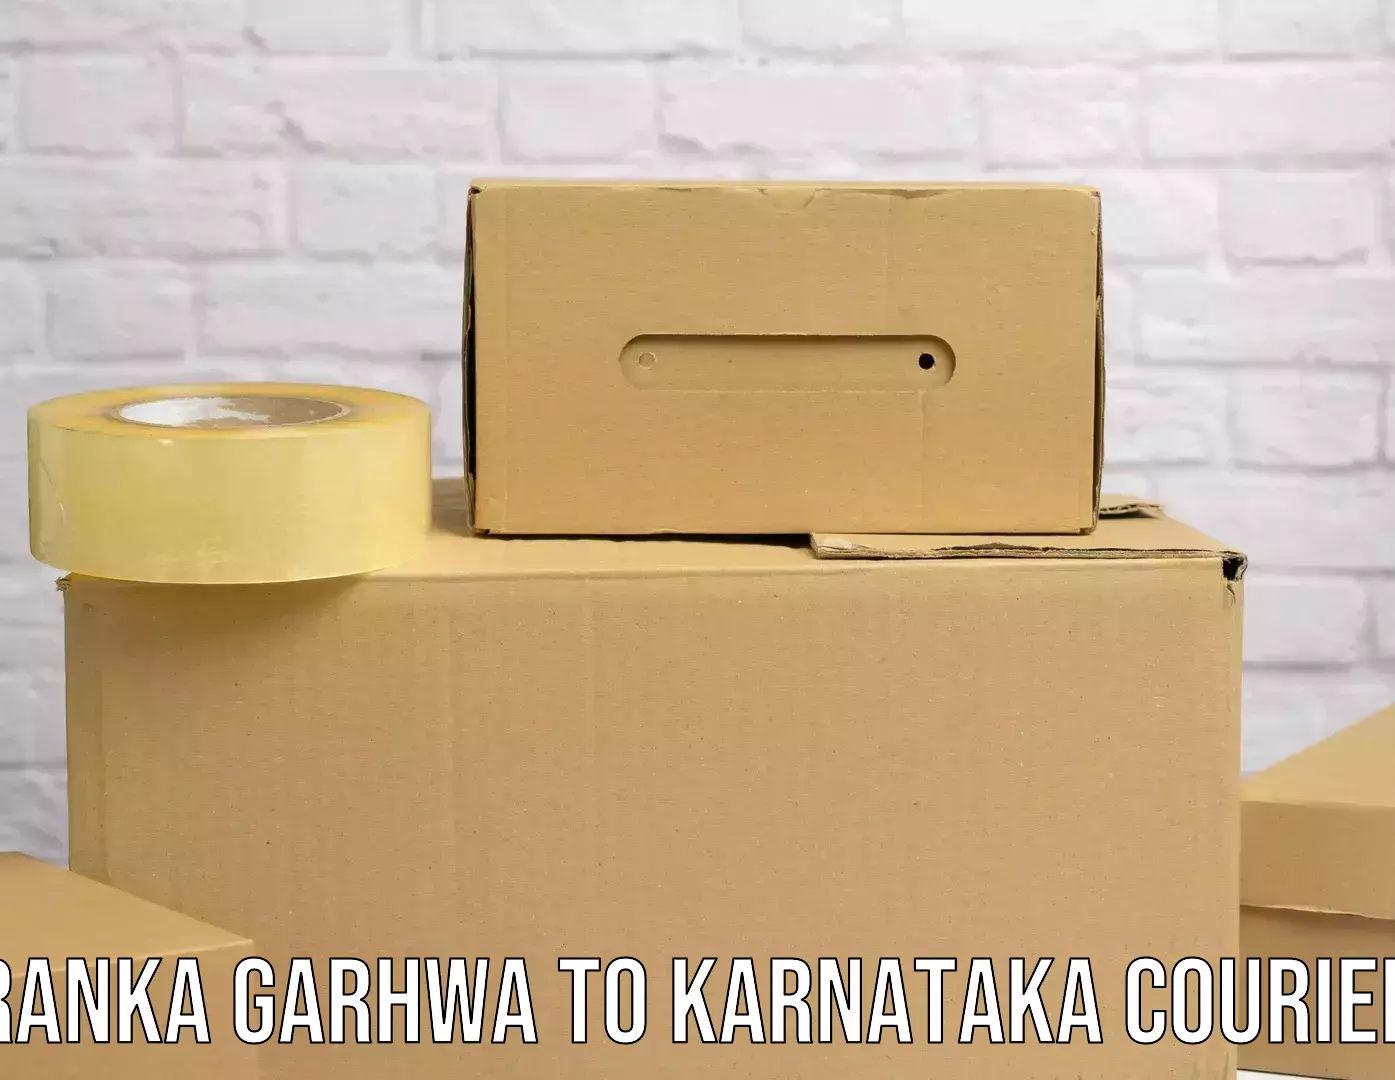 Innovative courier solutions Ranka Garhwa to Karnataka